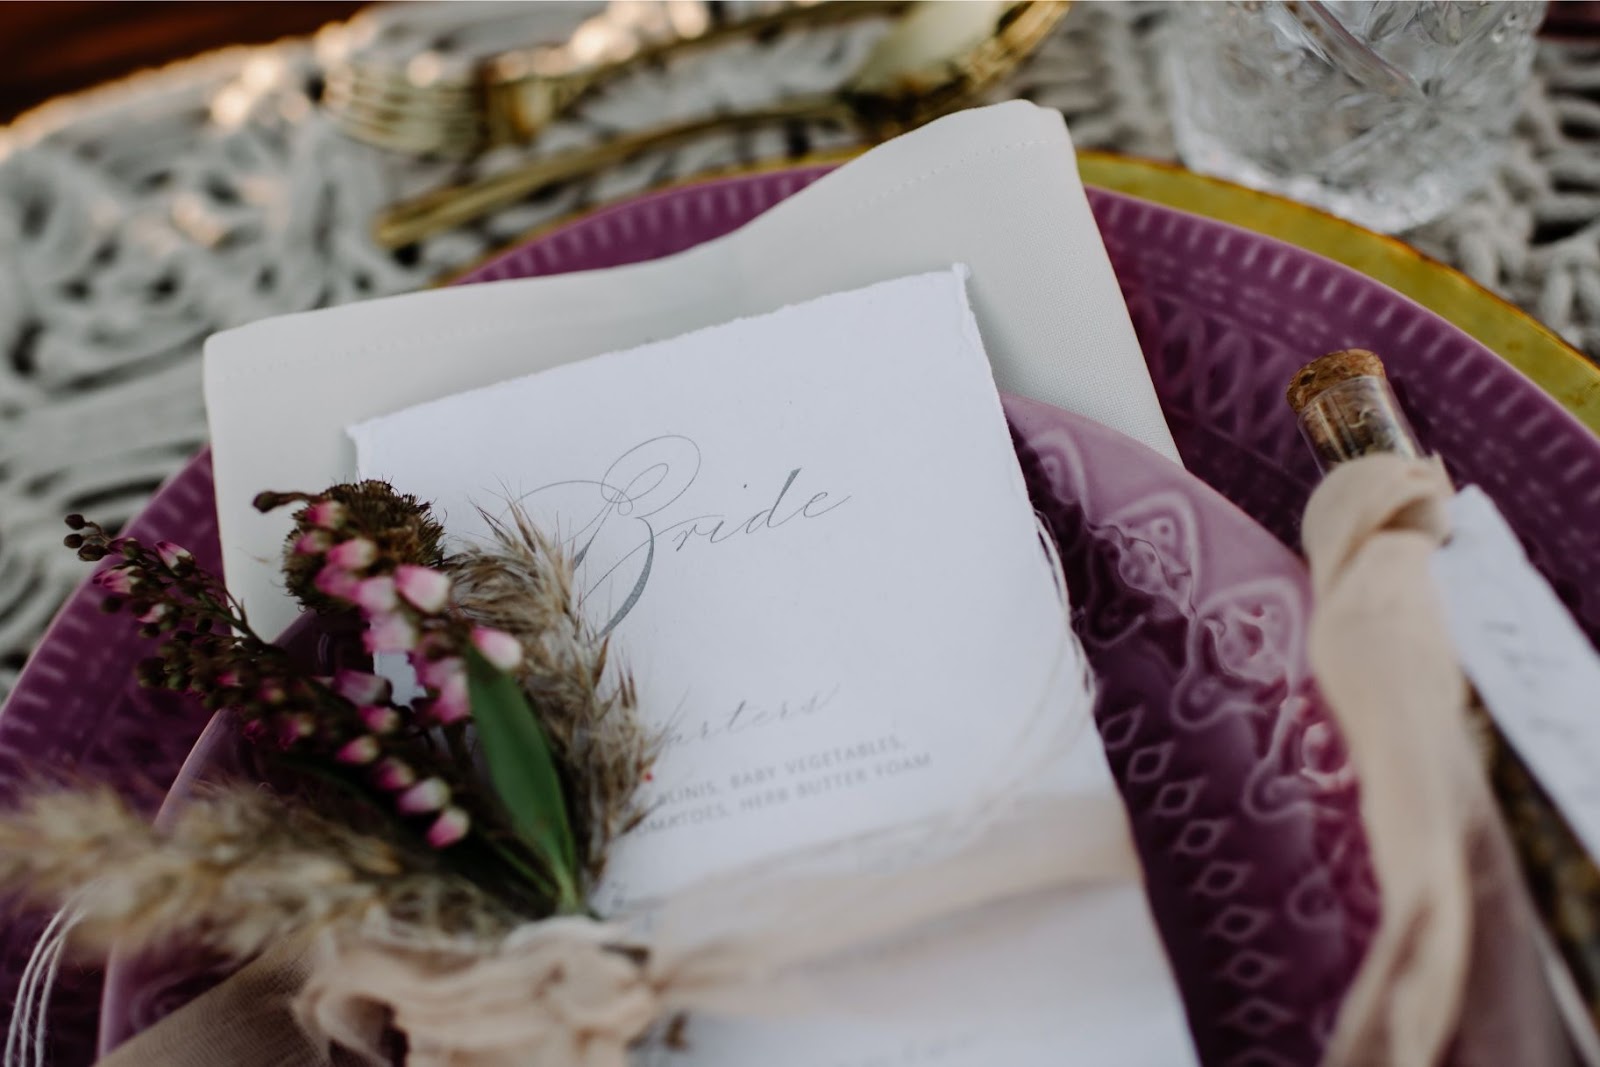 sandie bertrand photography perth weddings bridal gowns floral designer venue styling